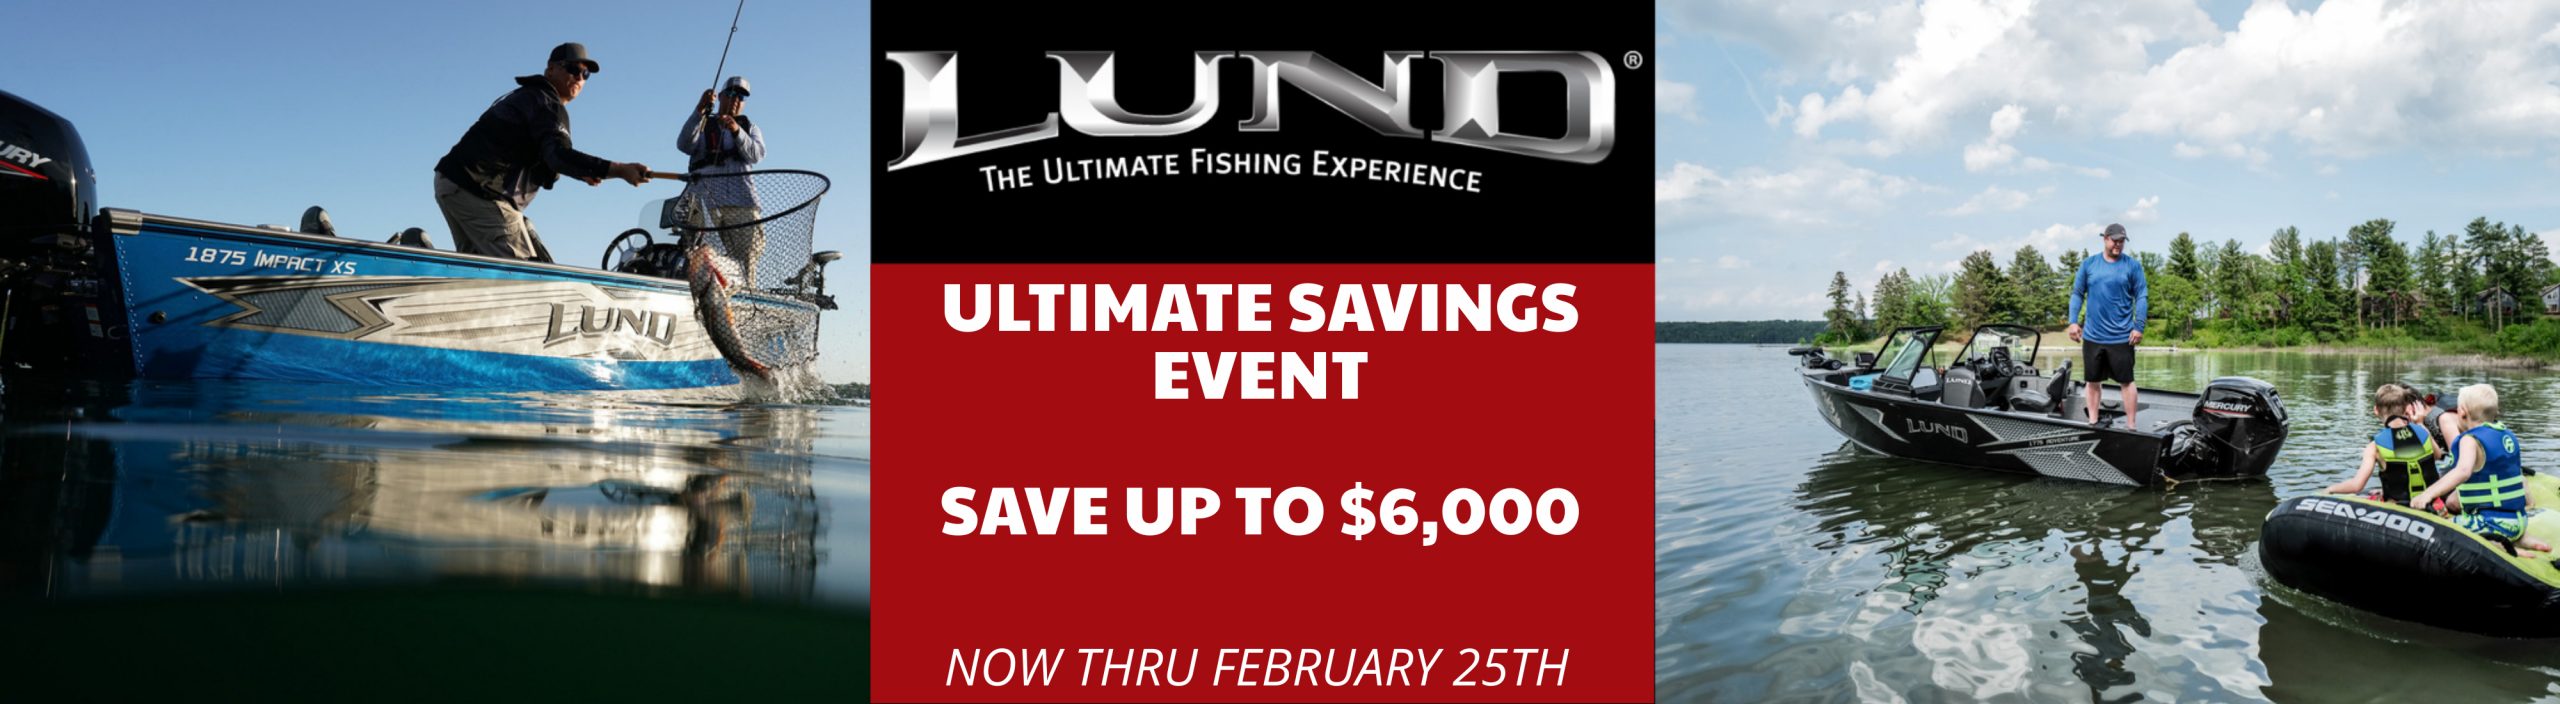 Lund Ultimate Savings Homepage Banner